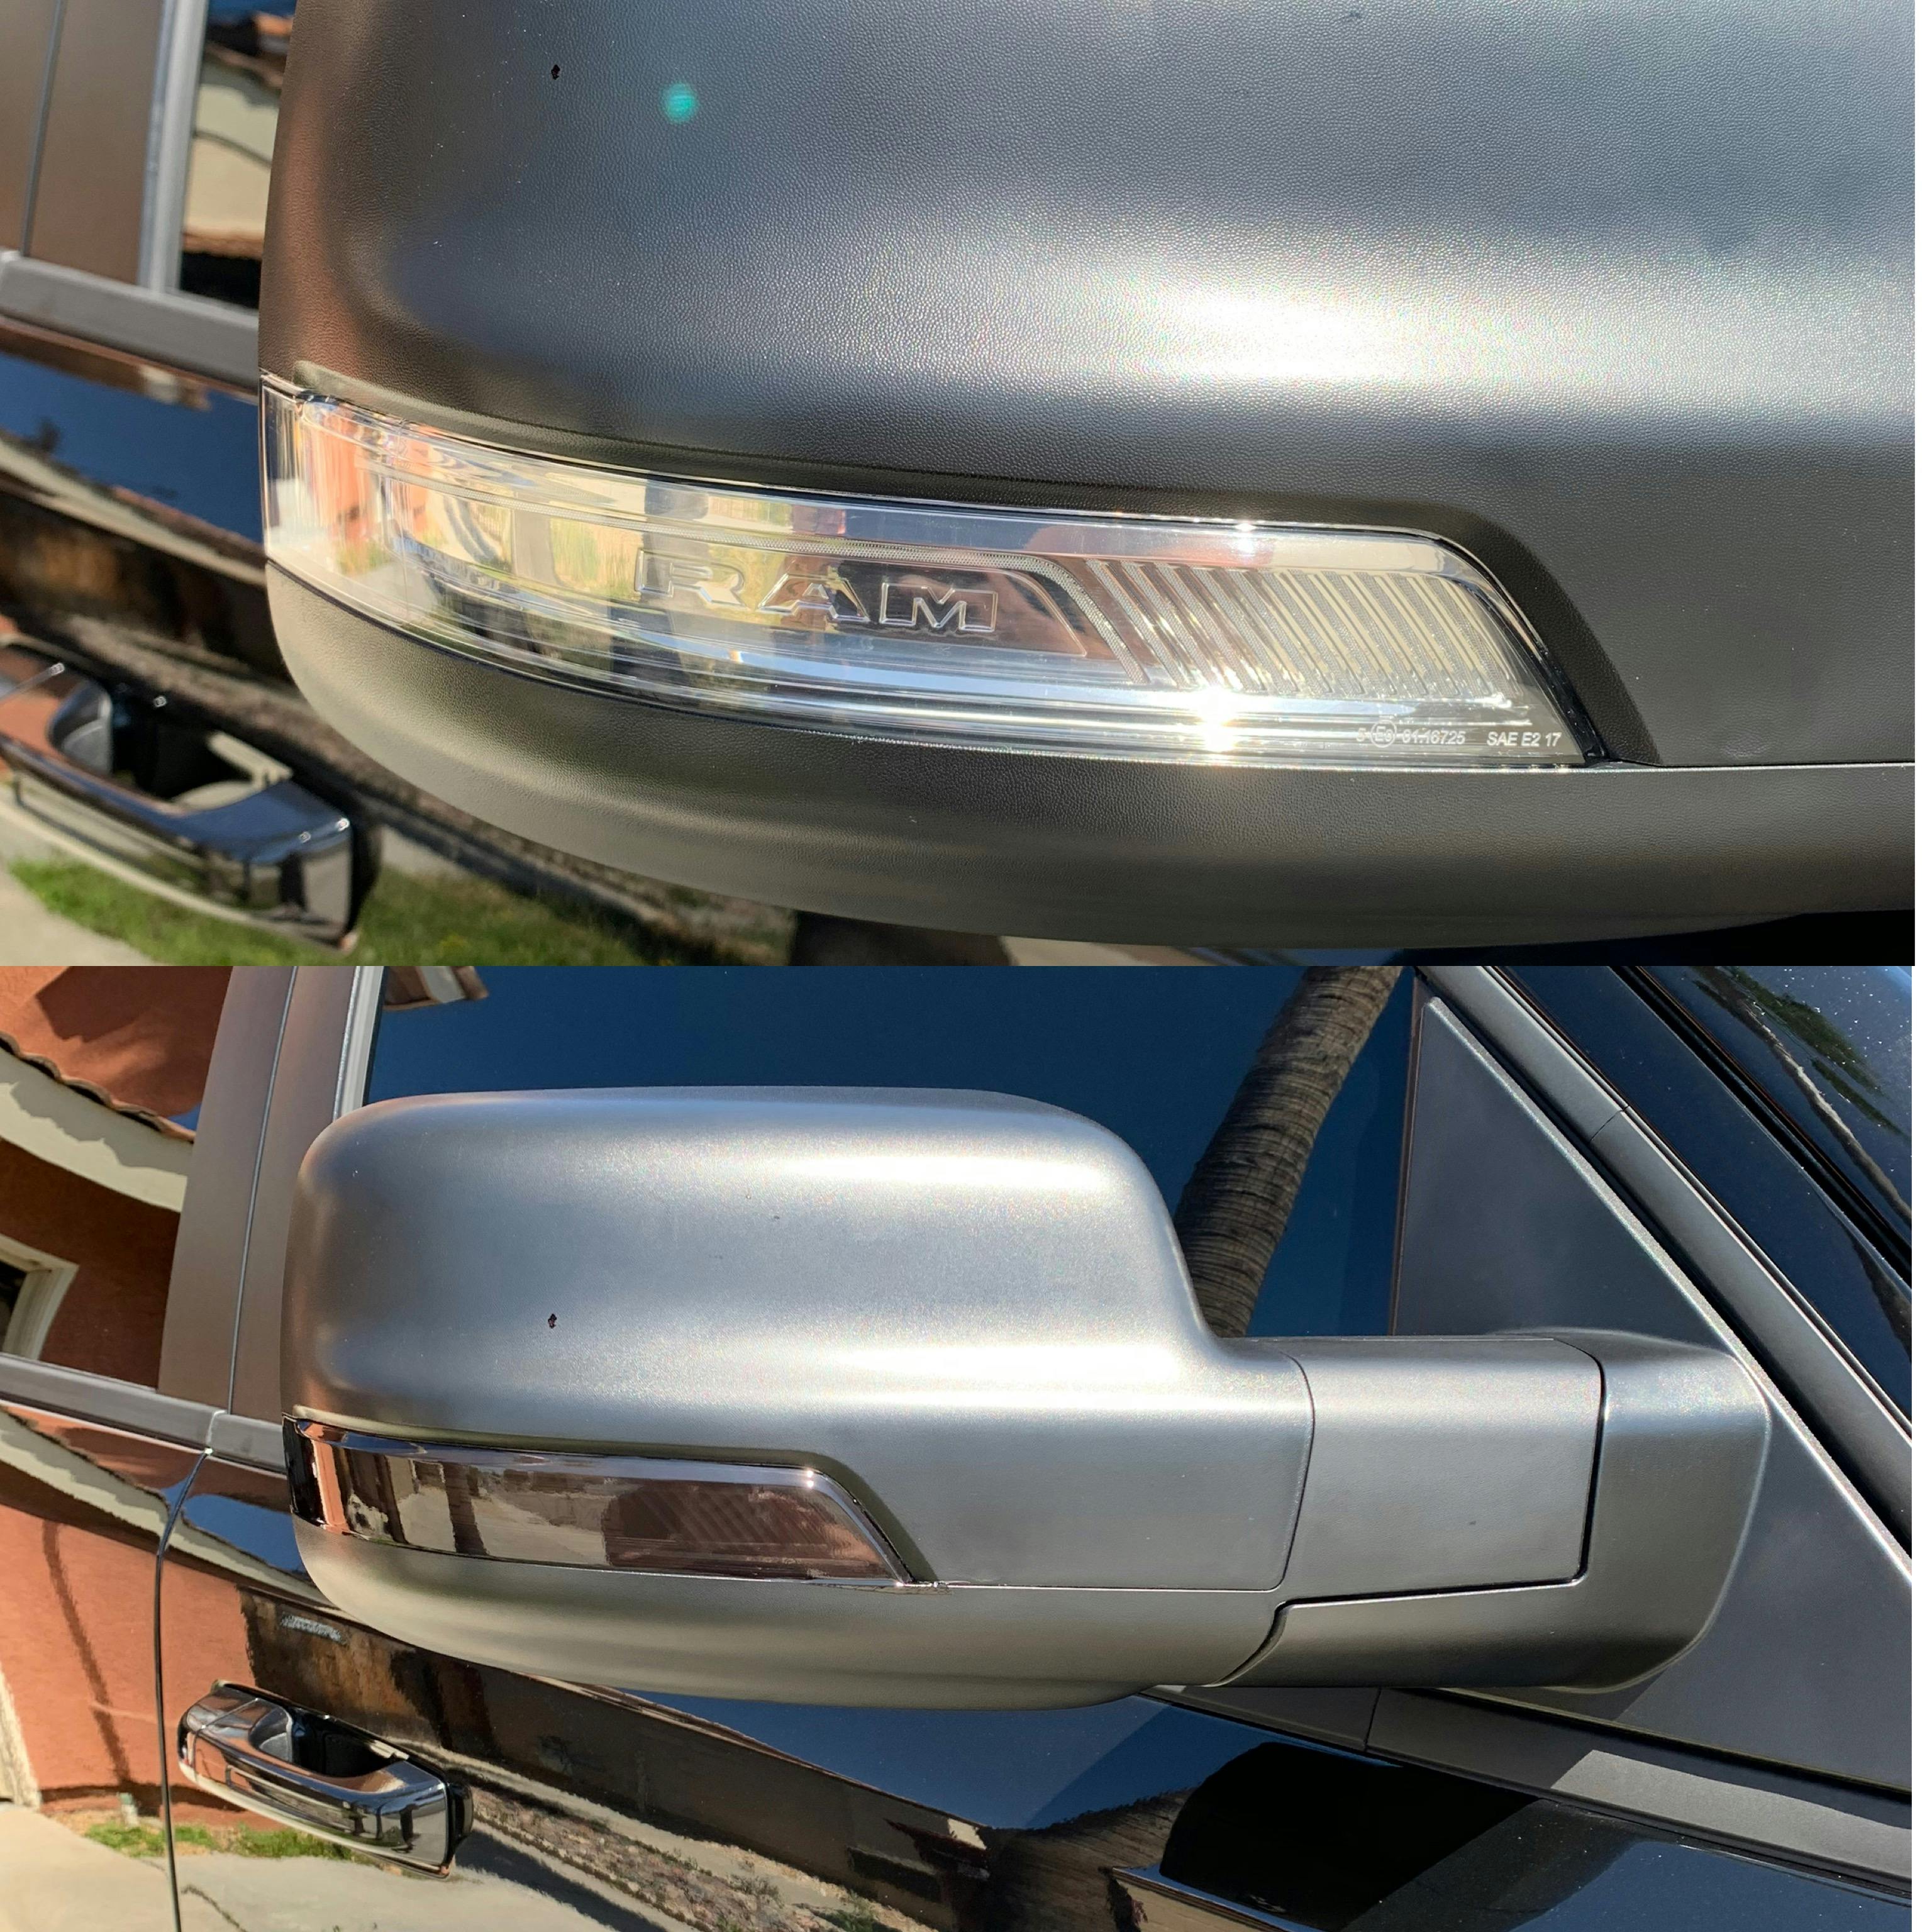 2019+ Dodge Ram 1500 Mirror Light Tint Kit - Overlays 2019 Ram 1500 Windshield Replacement Cost